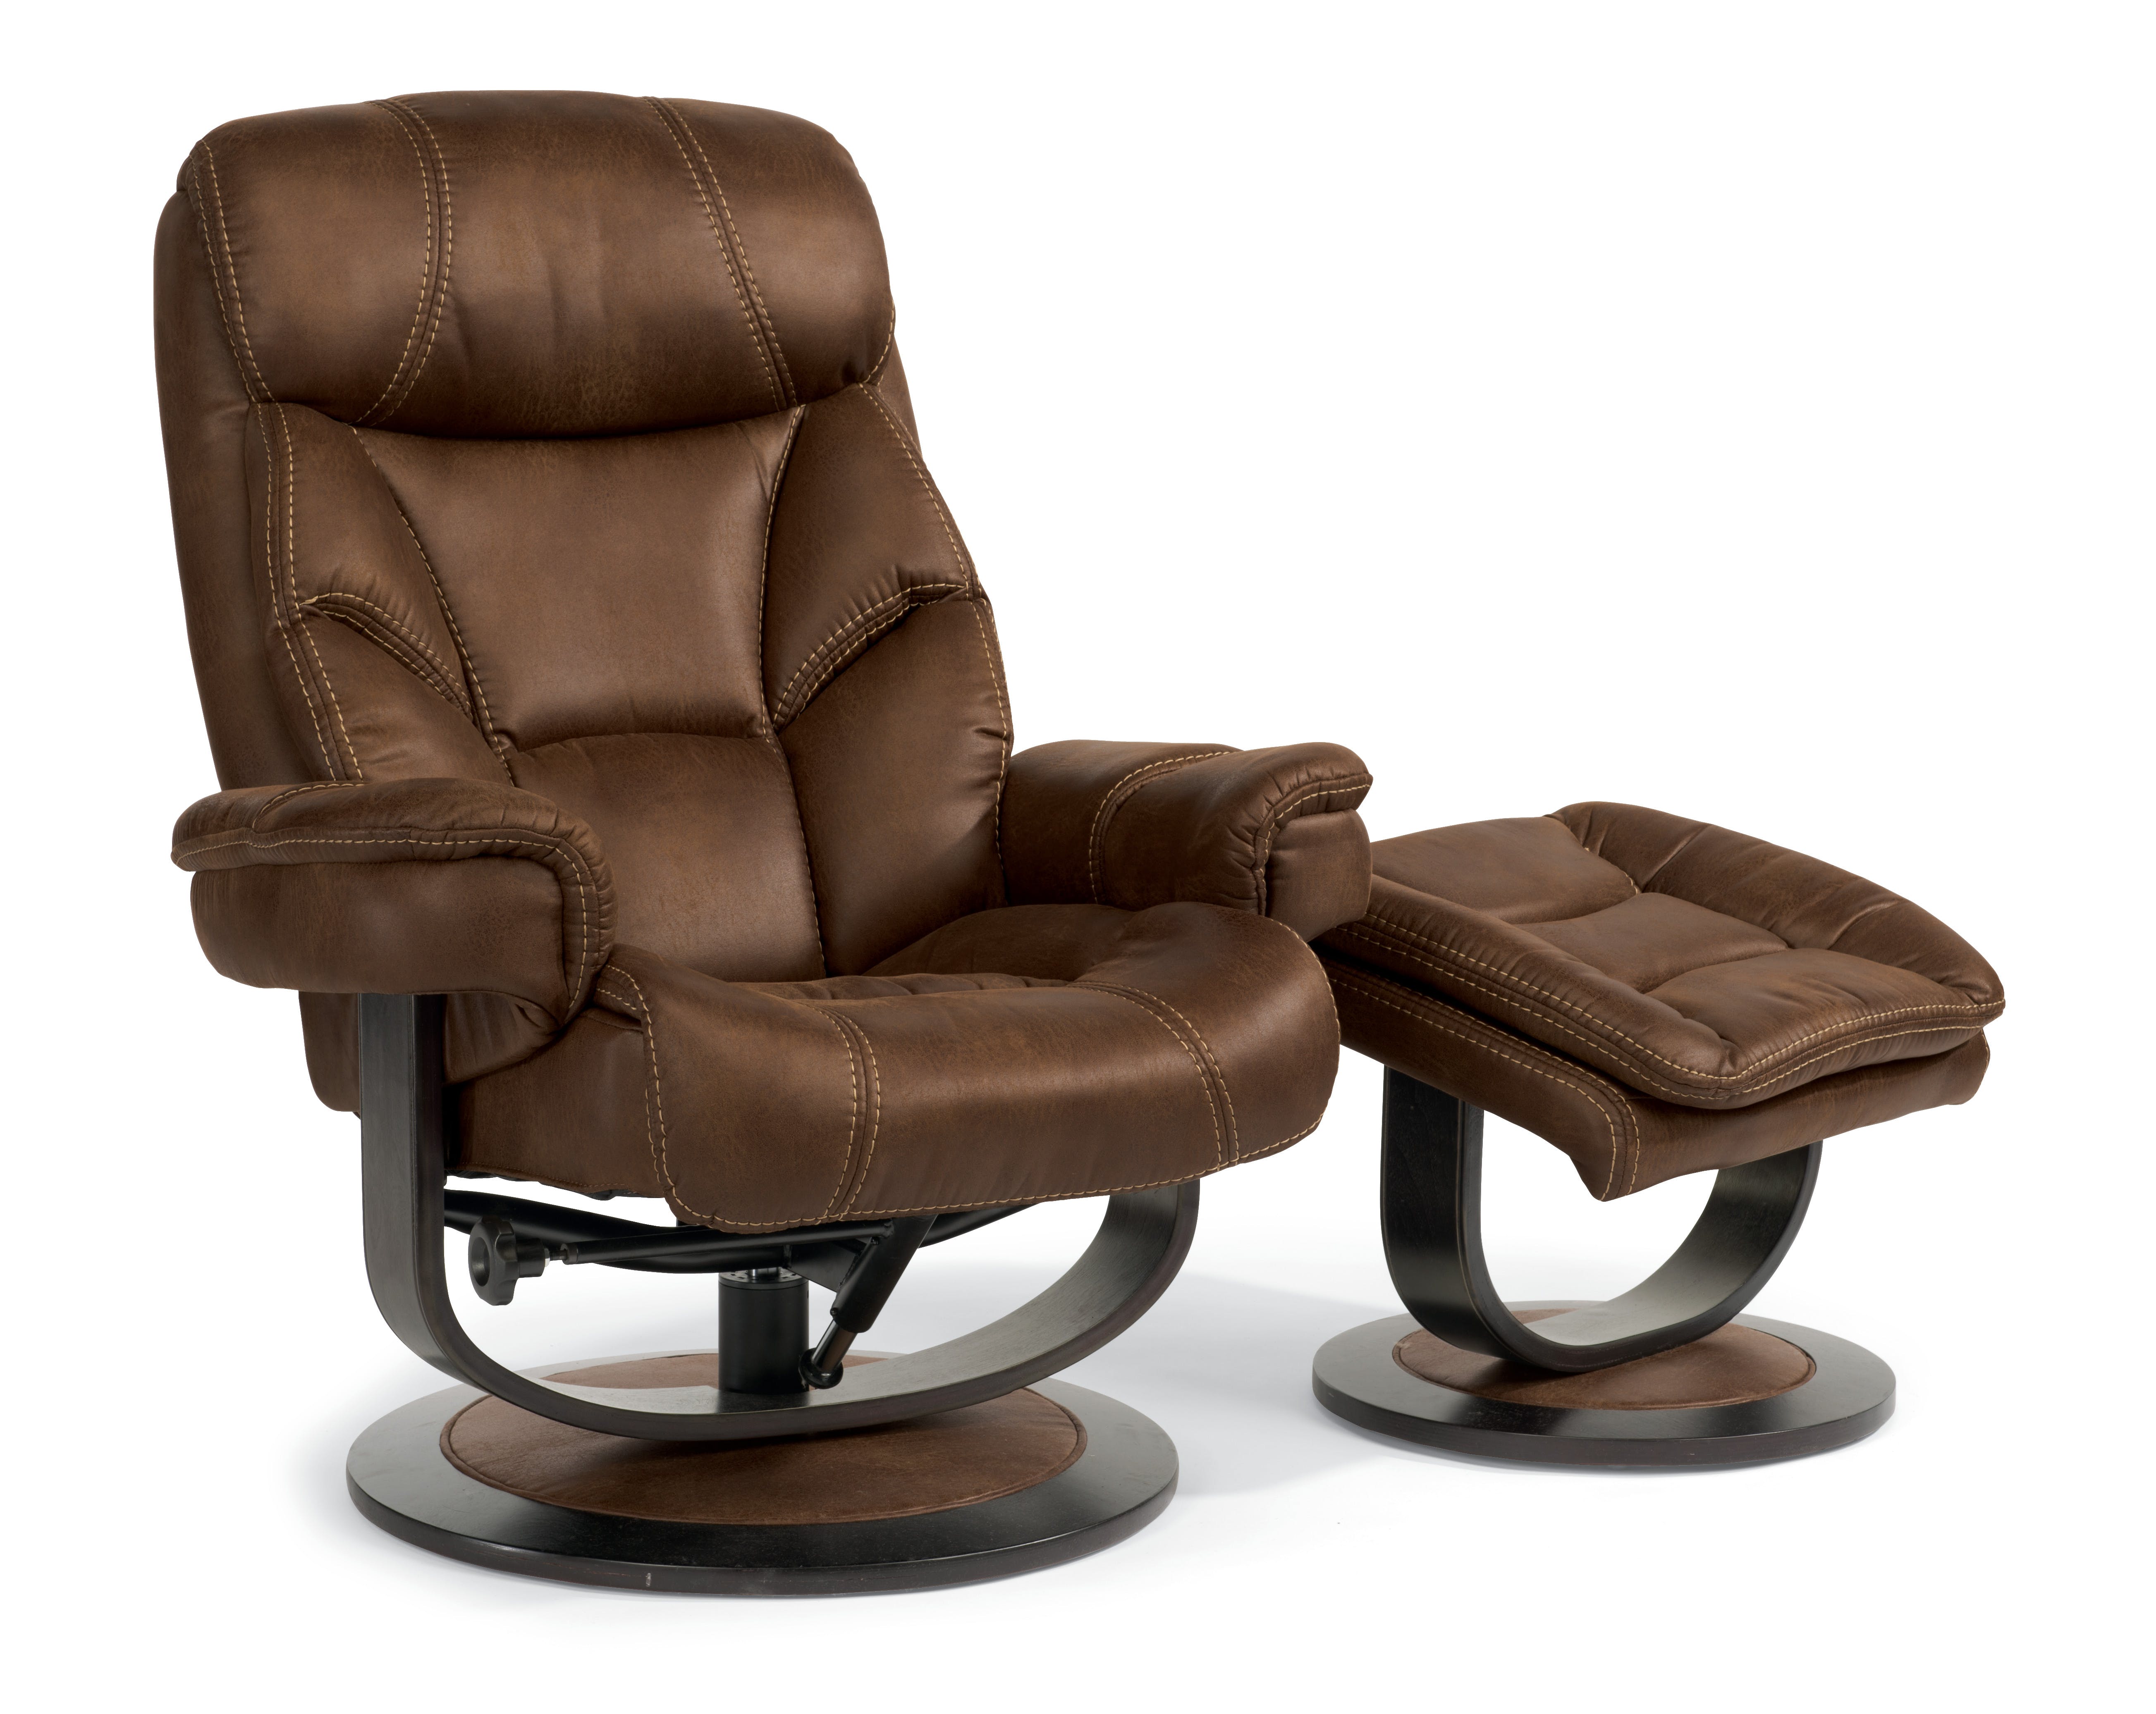 Flexsteel Recliner Chair and Ottoman 456870 - Talsma Furniture